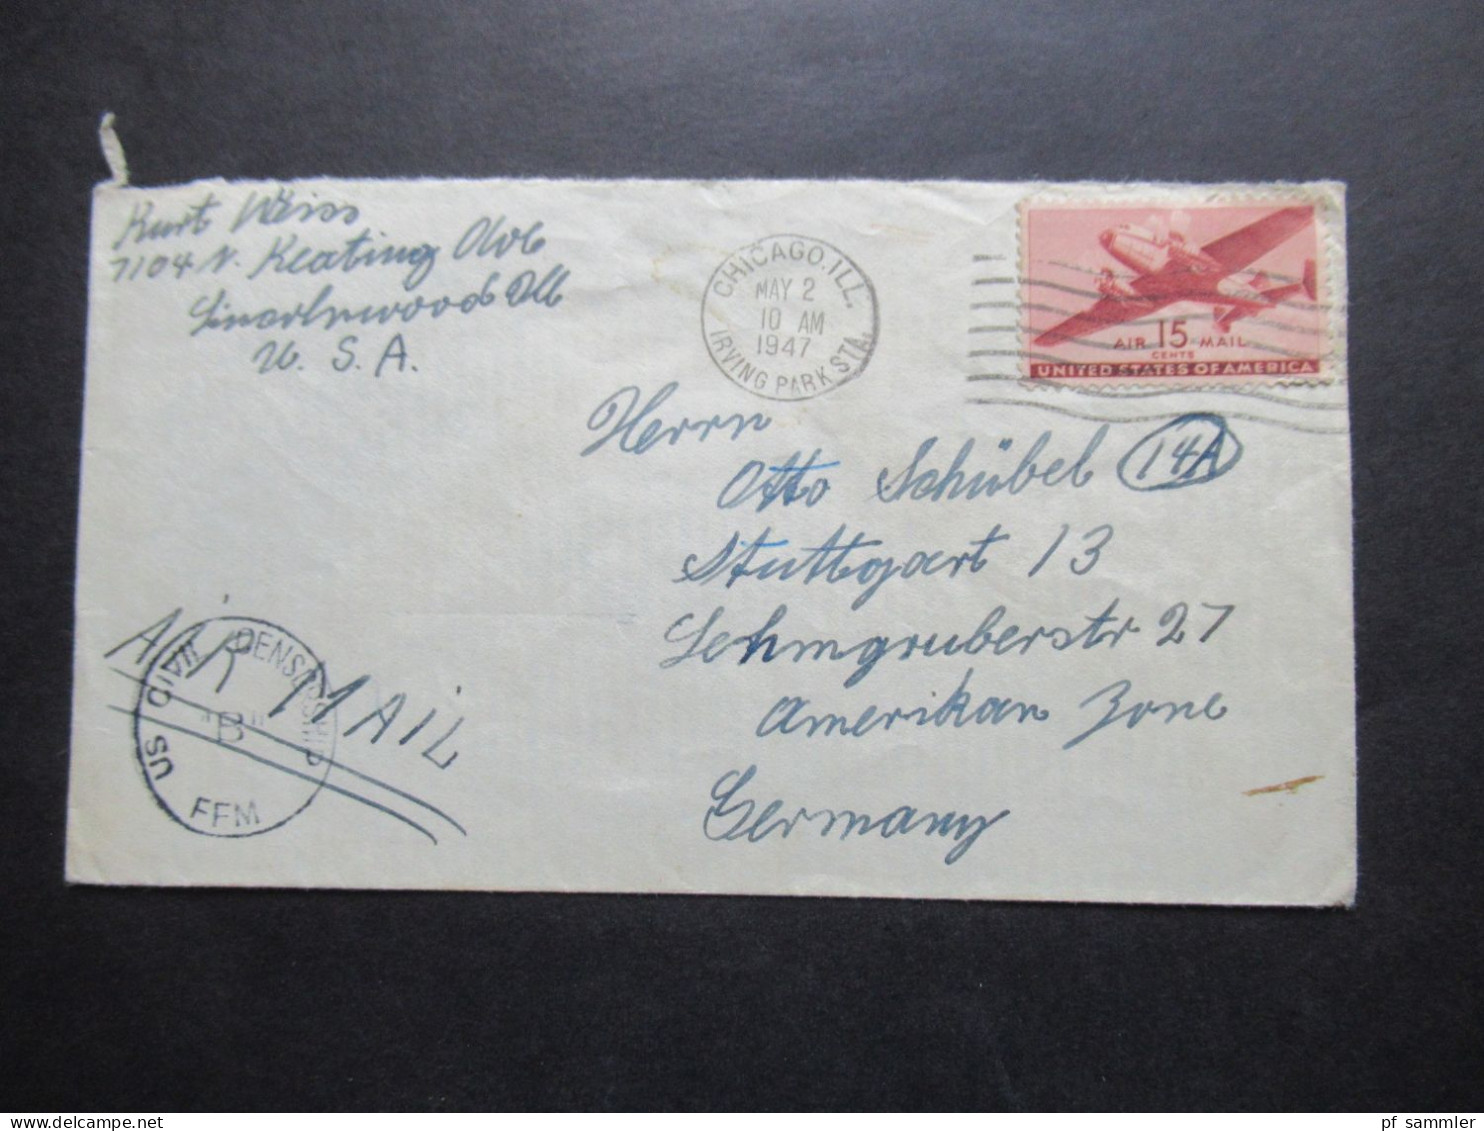 USA 1947 Luftpost Zensurbeleg / Stempel US Civil Censorship "B" FFM / Chicaco Ill. Irving Parks Sta. Nach Stuttgart 13 - Cartas & Documentos